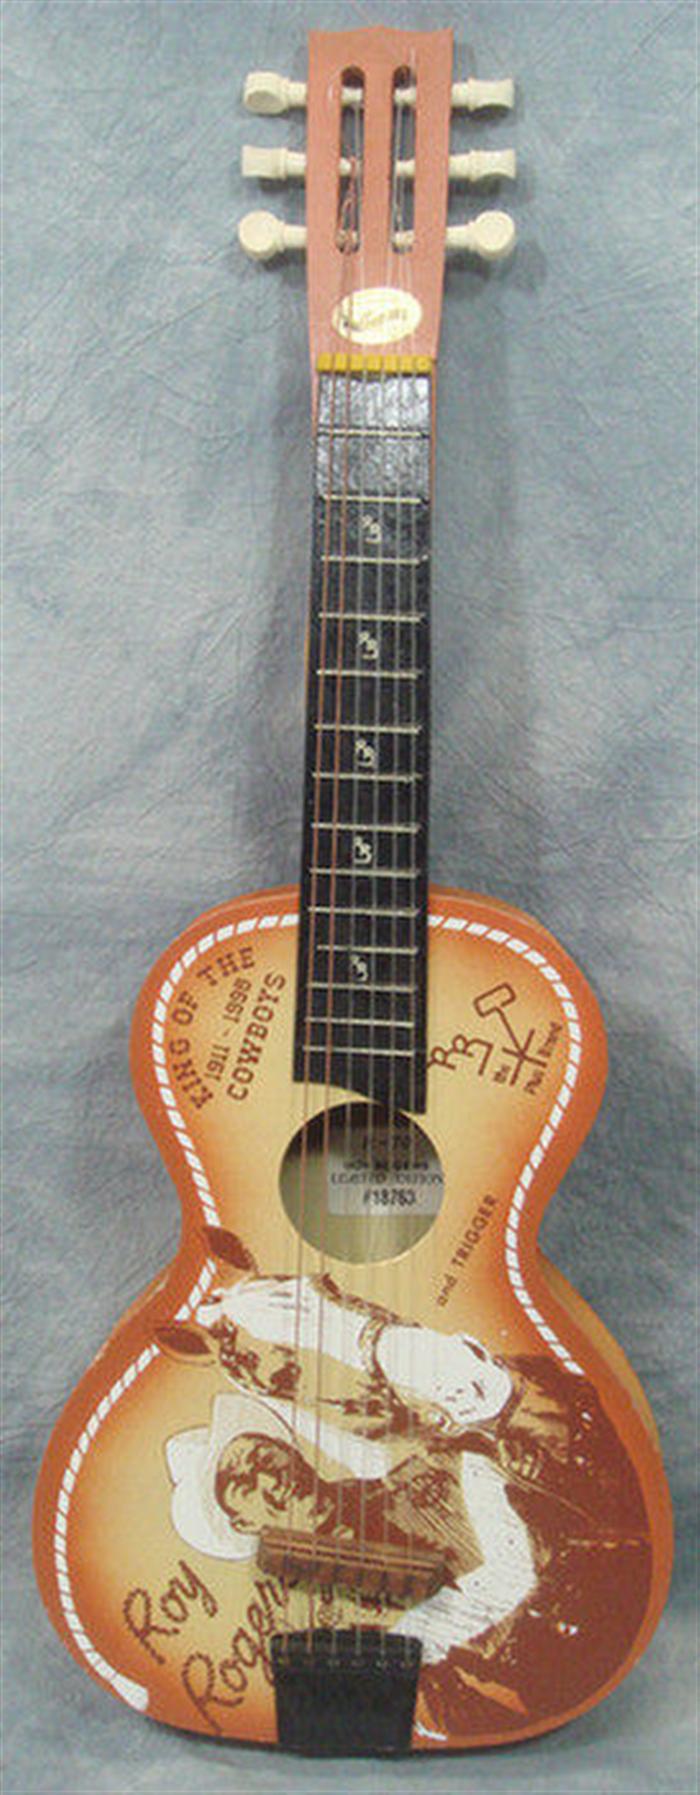 Jefferson Roy Rogers Guitar MIB  3c9f9